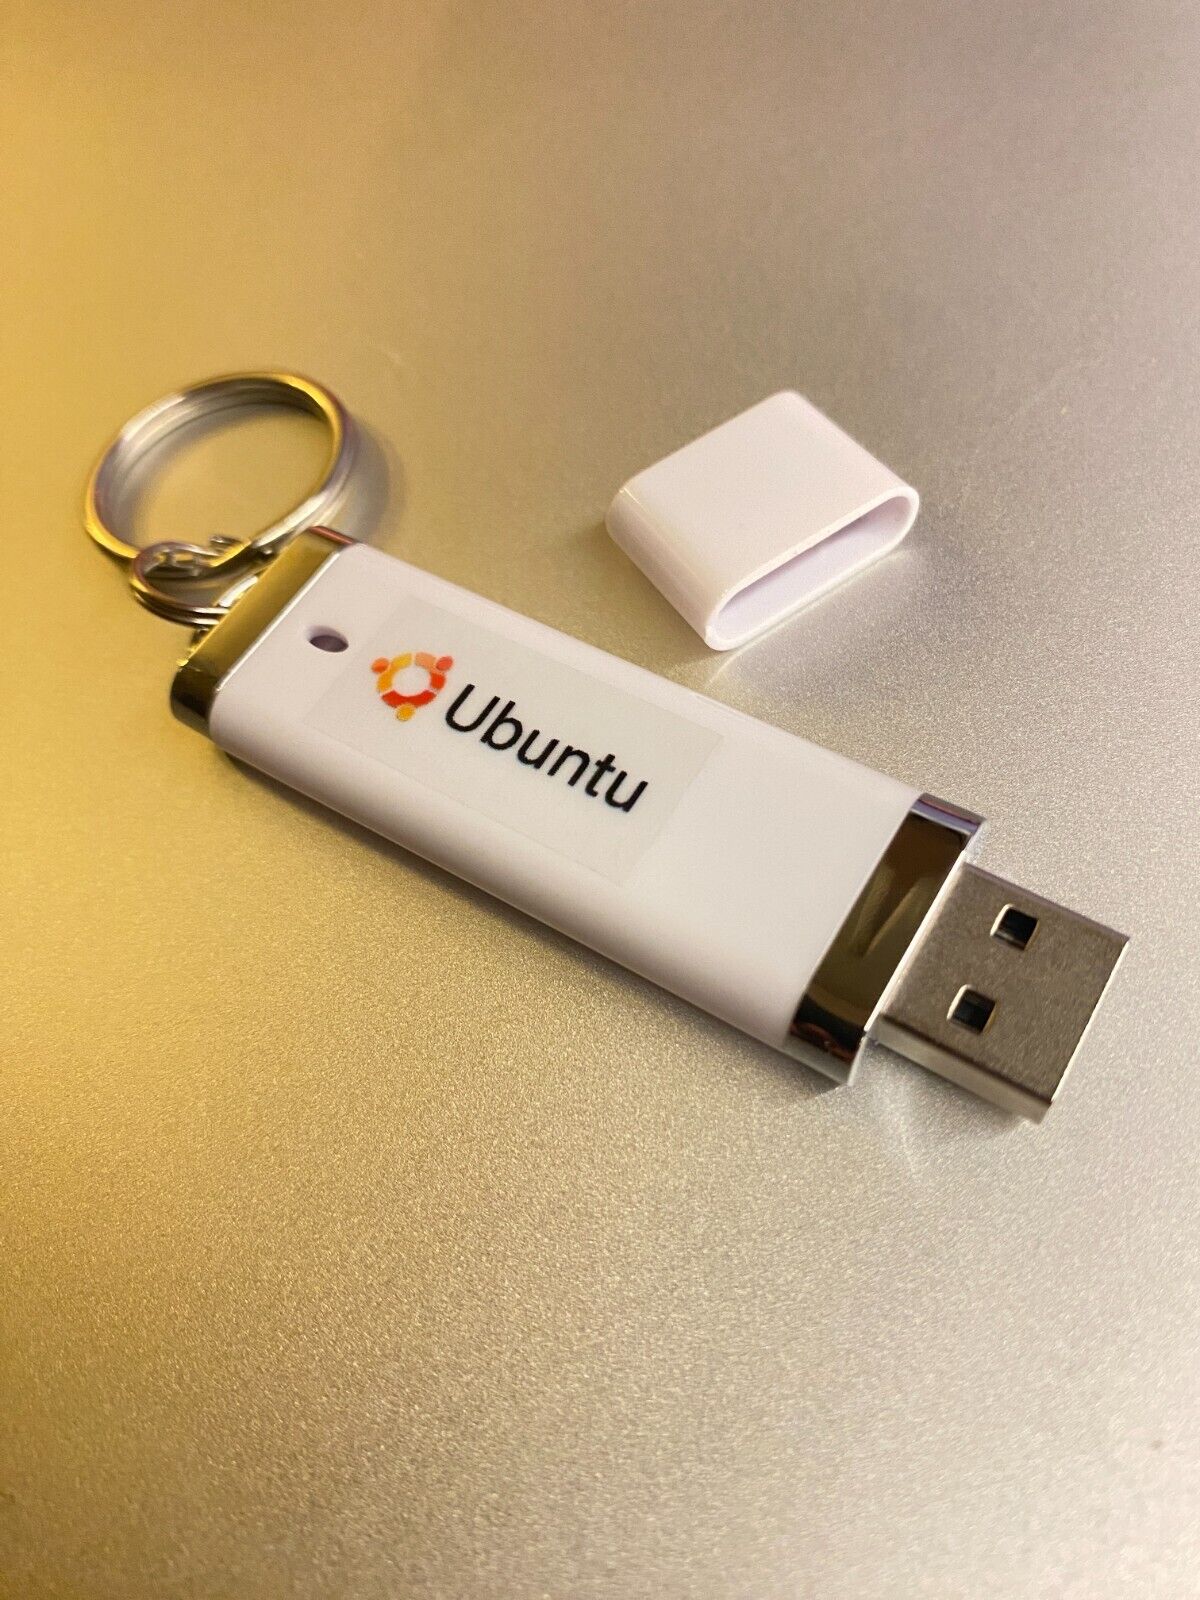 Ubuntu 22.04.3 (Latest Version) 8 GB Bootable USB Flash Drive 64